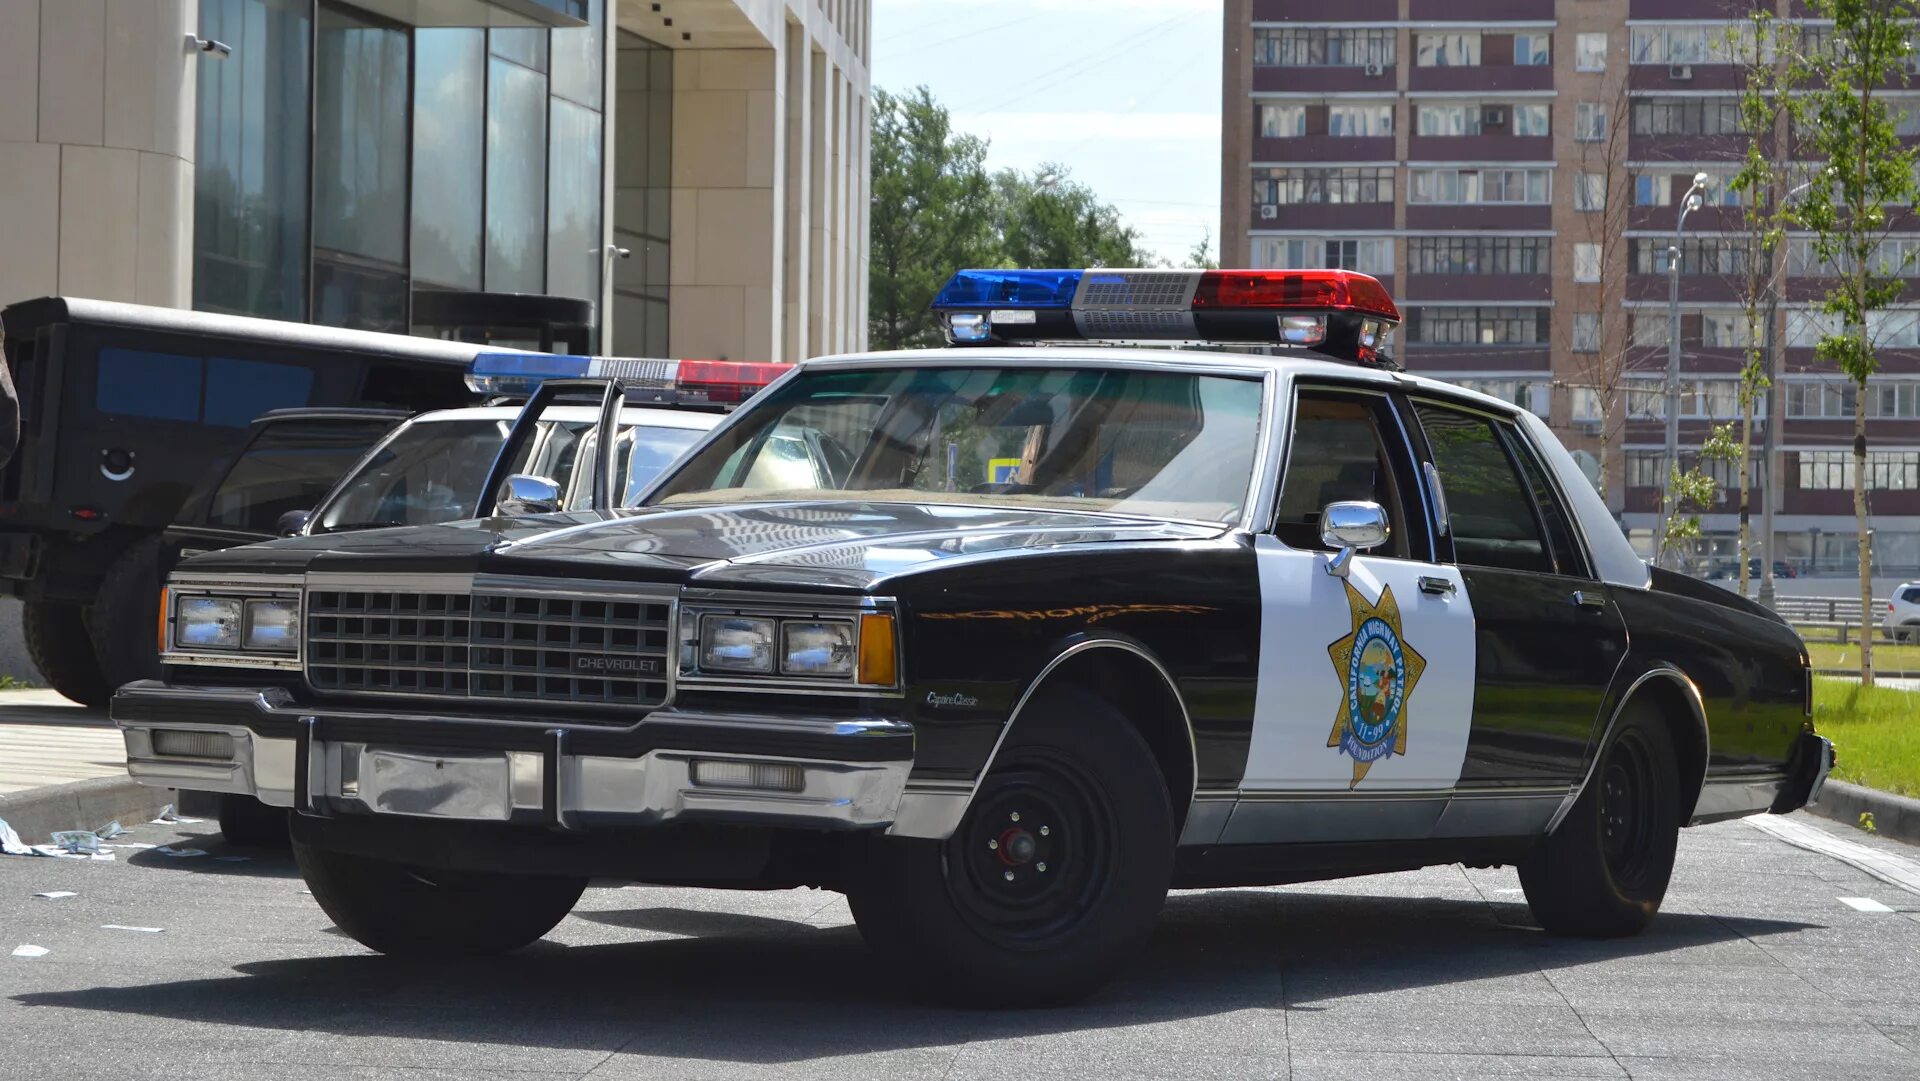 Полицейская машина 7 букв. Chevrolet Caprice 1987 LAPD. Chevrolet Caprice 1987 Police. Chevrolet Caprice 1985 Police. Chevrolet Caprice 1980 Police.